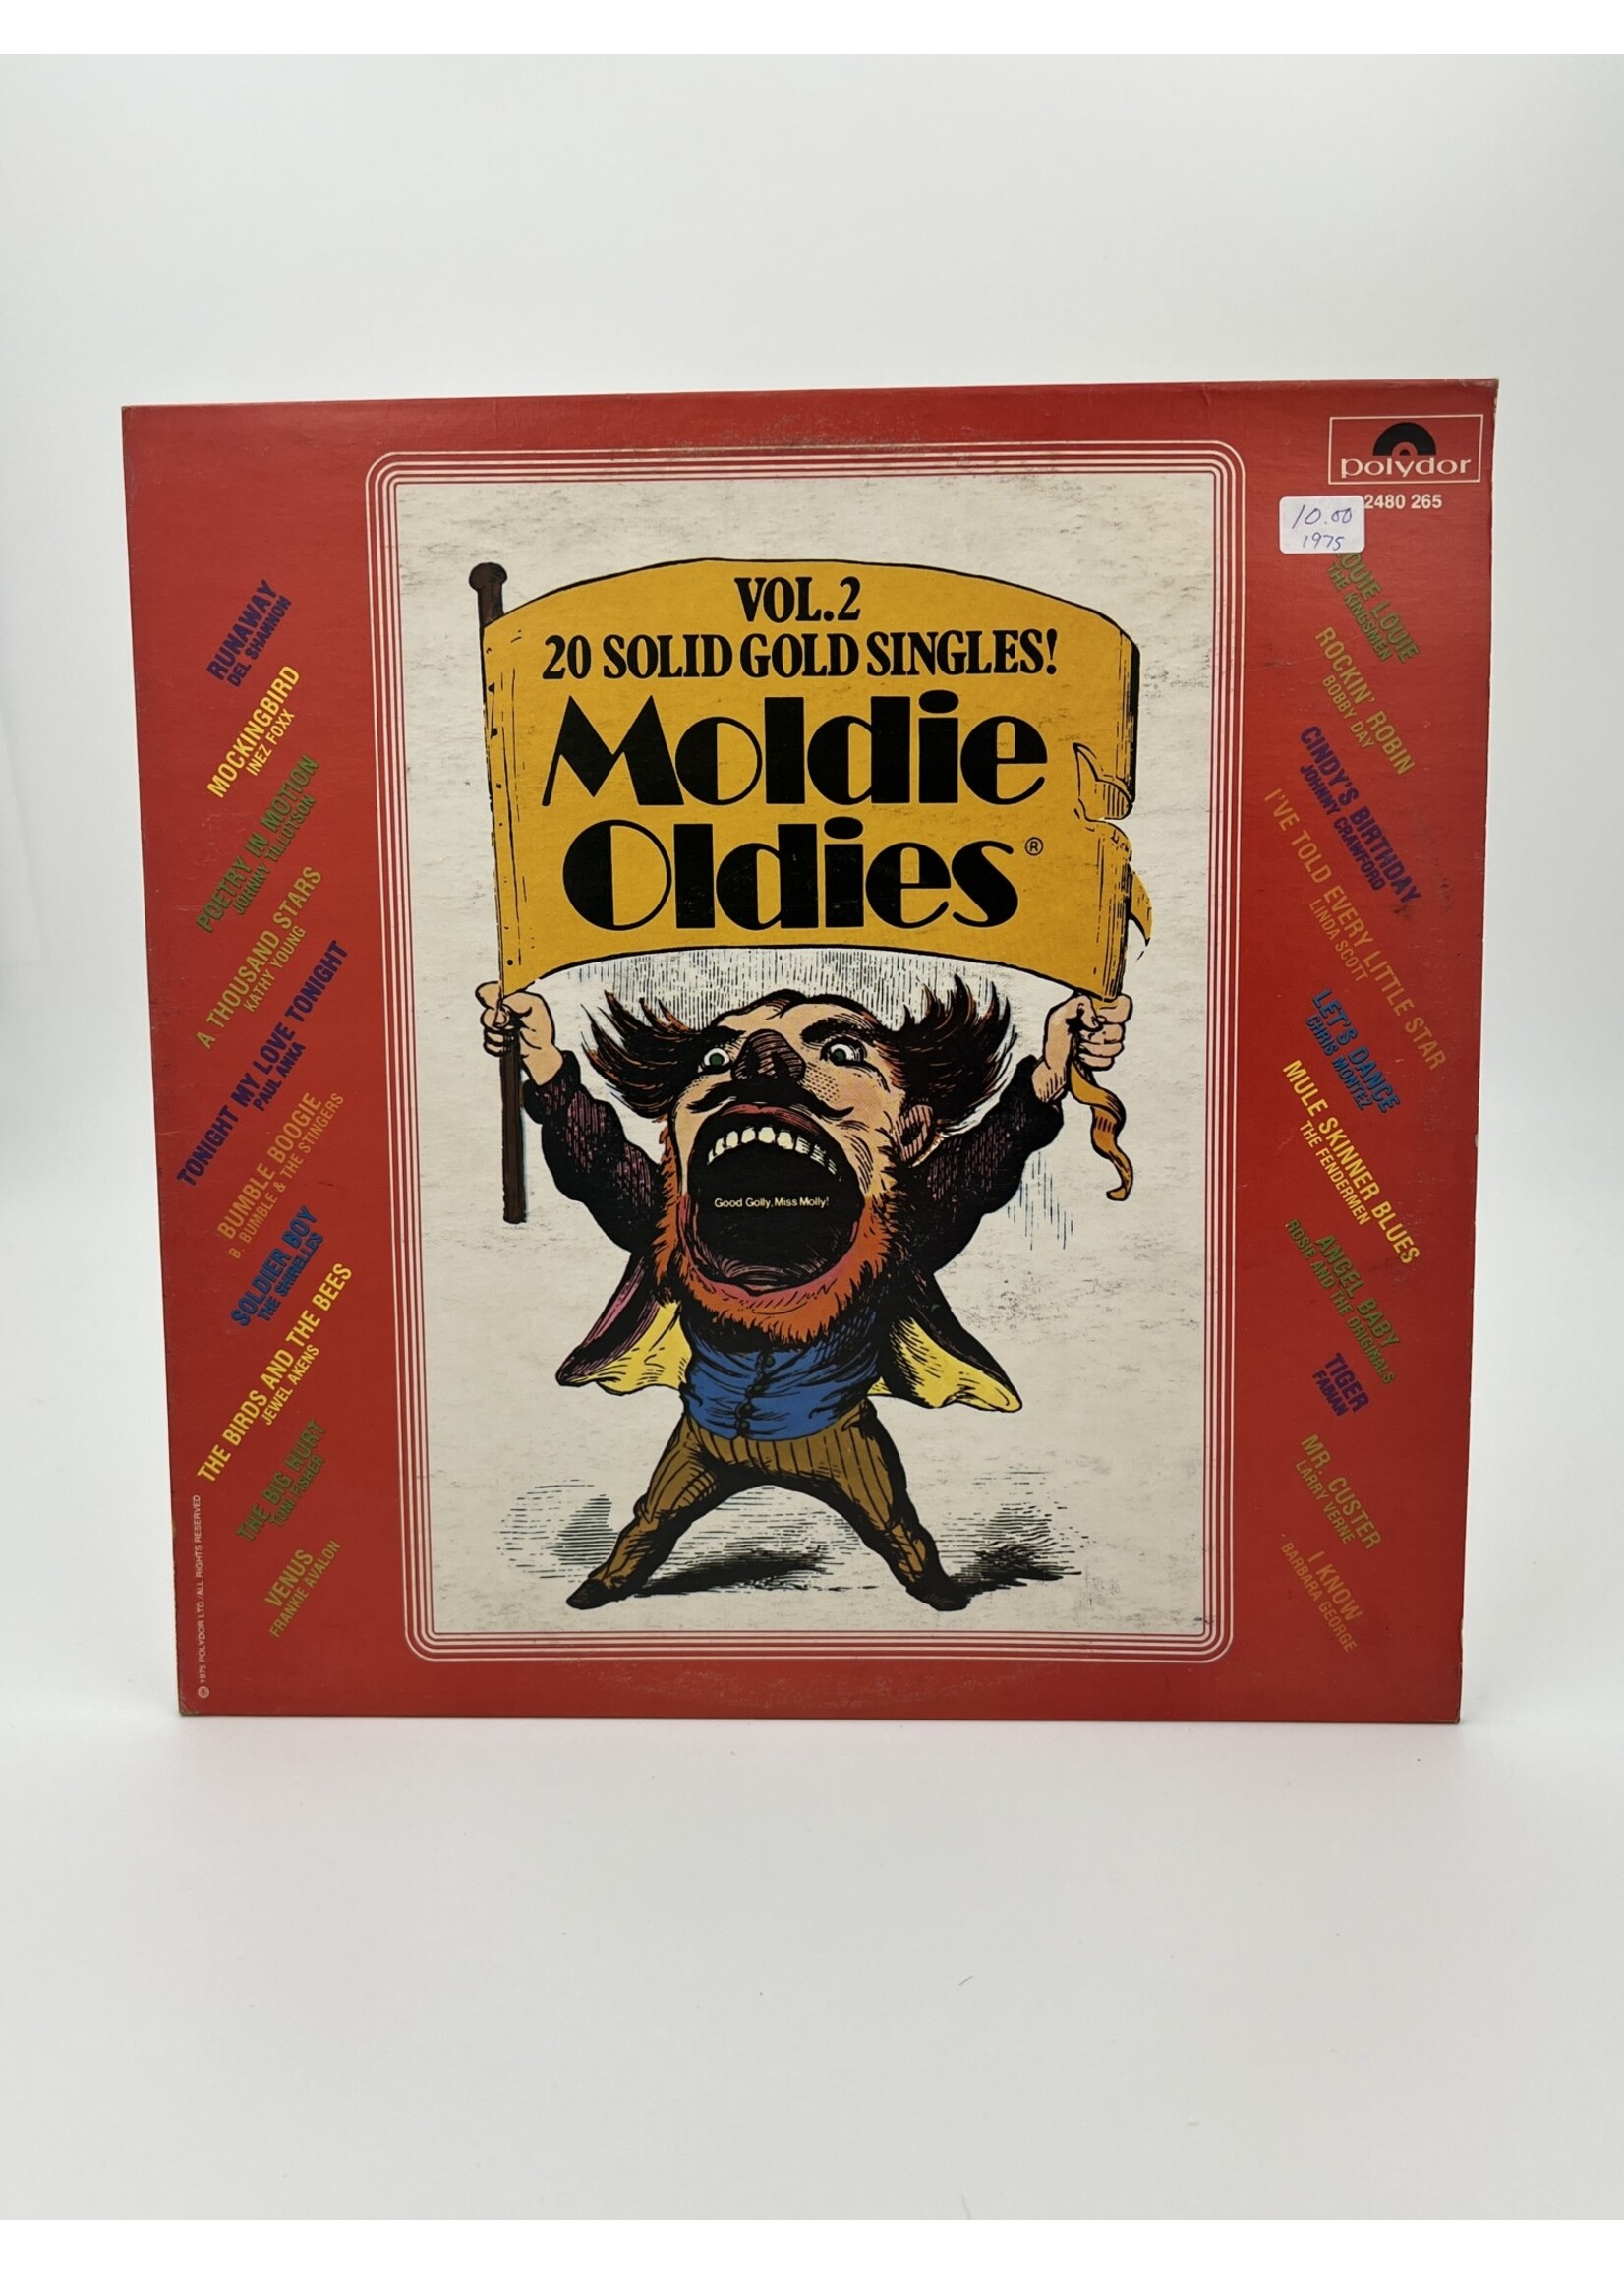 LP   Moldie Oldies 20 Solid Gold Singles Volume 2 LP Record